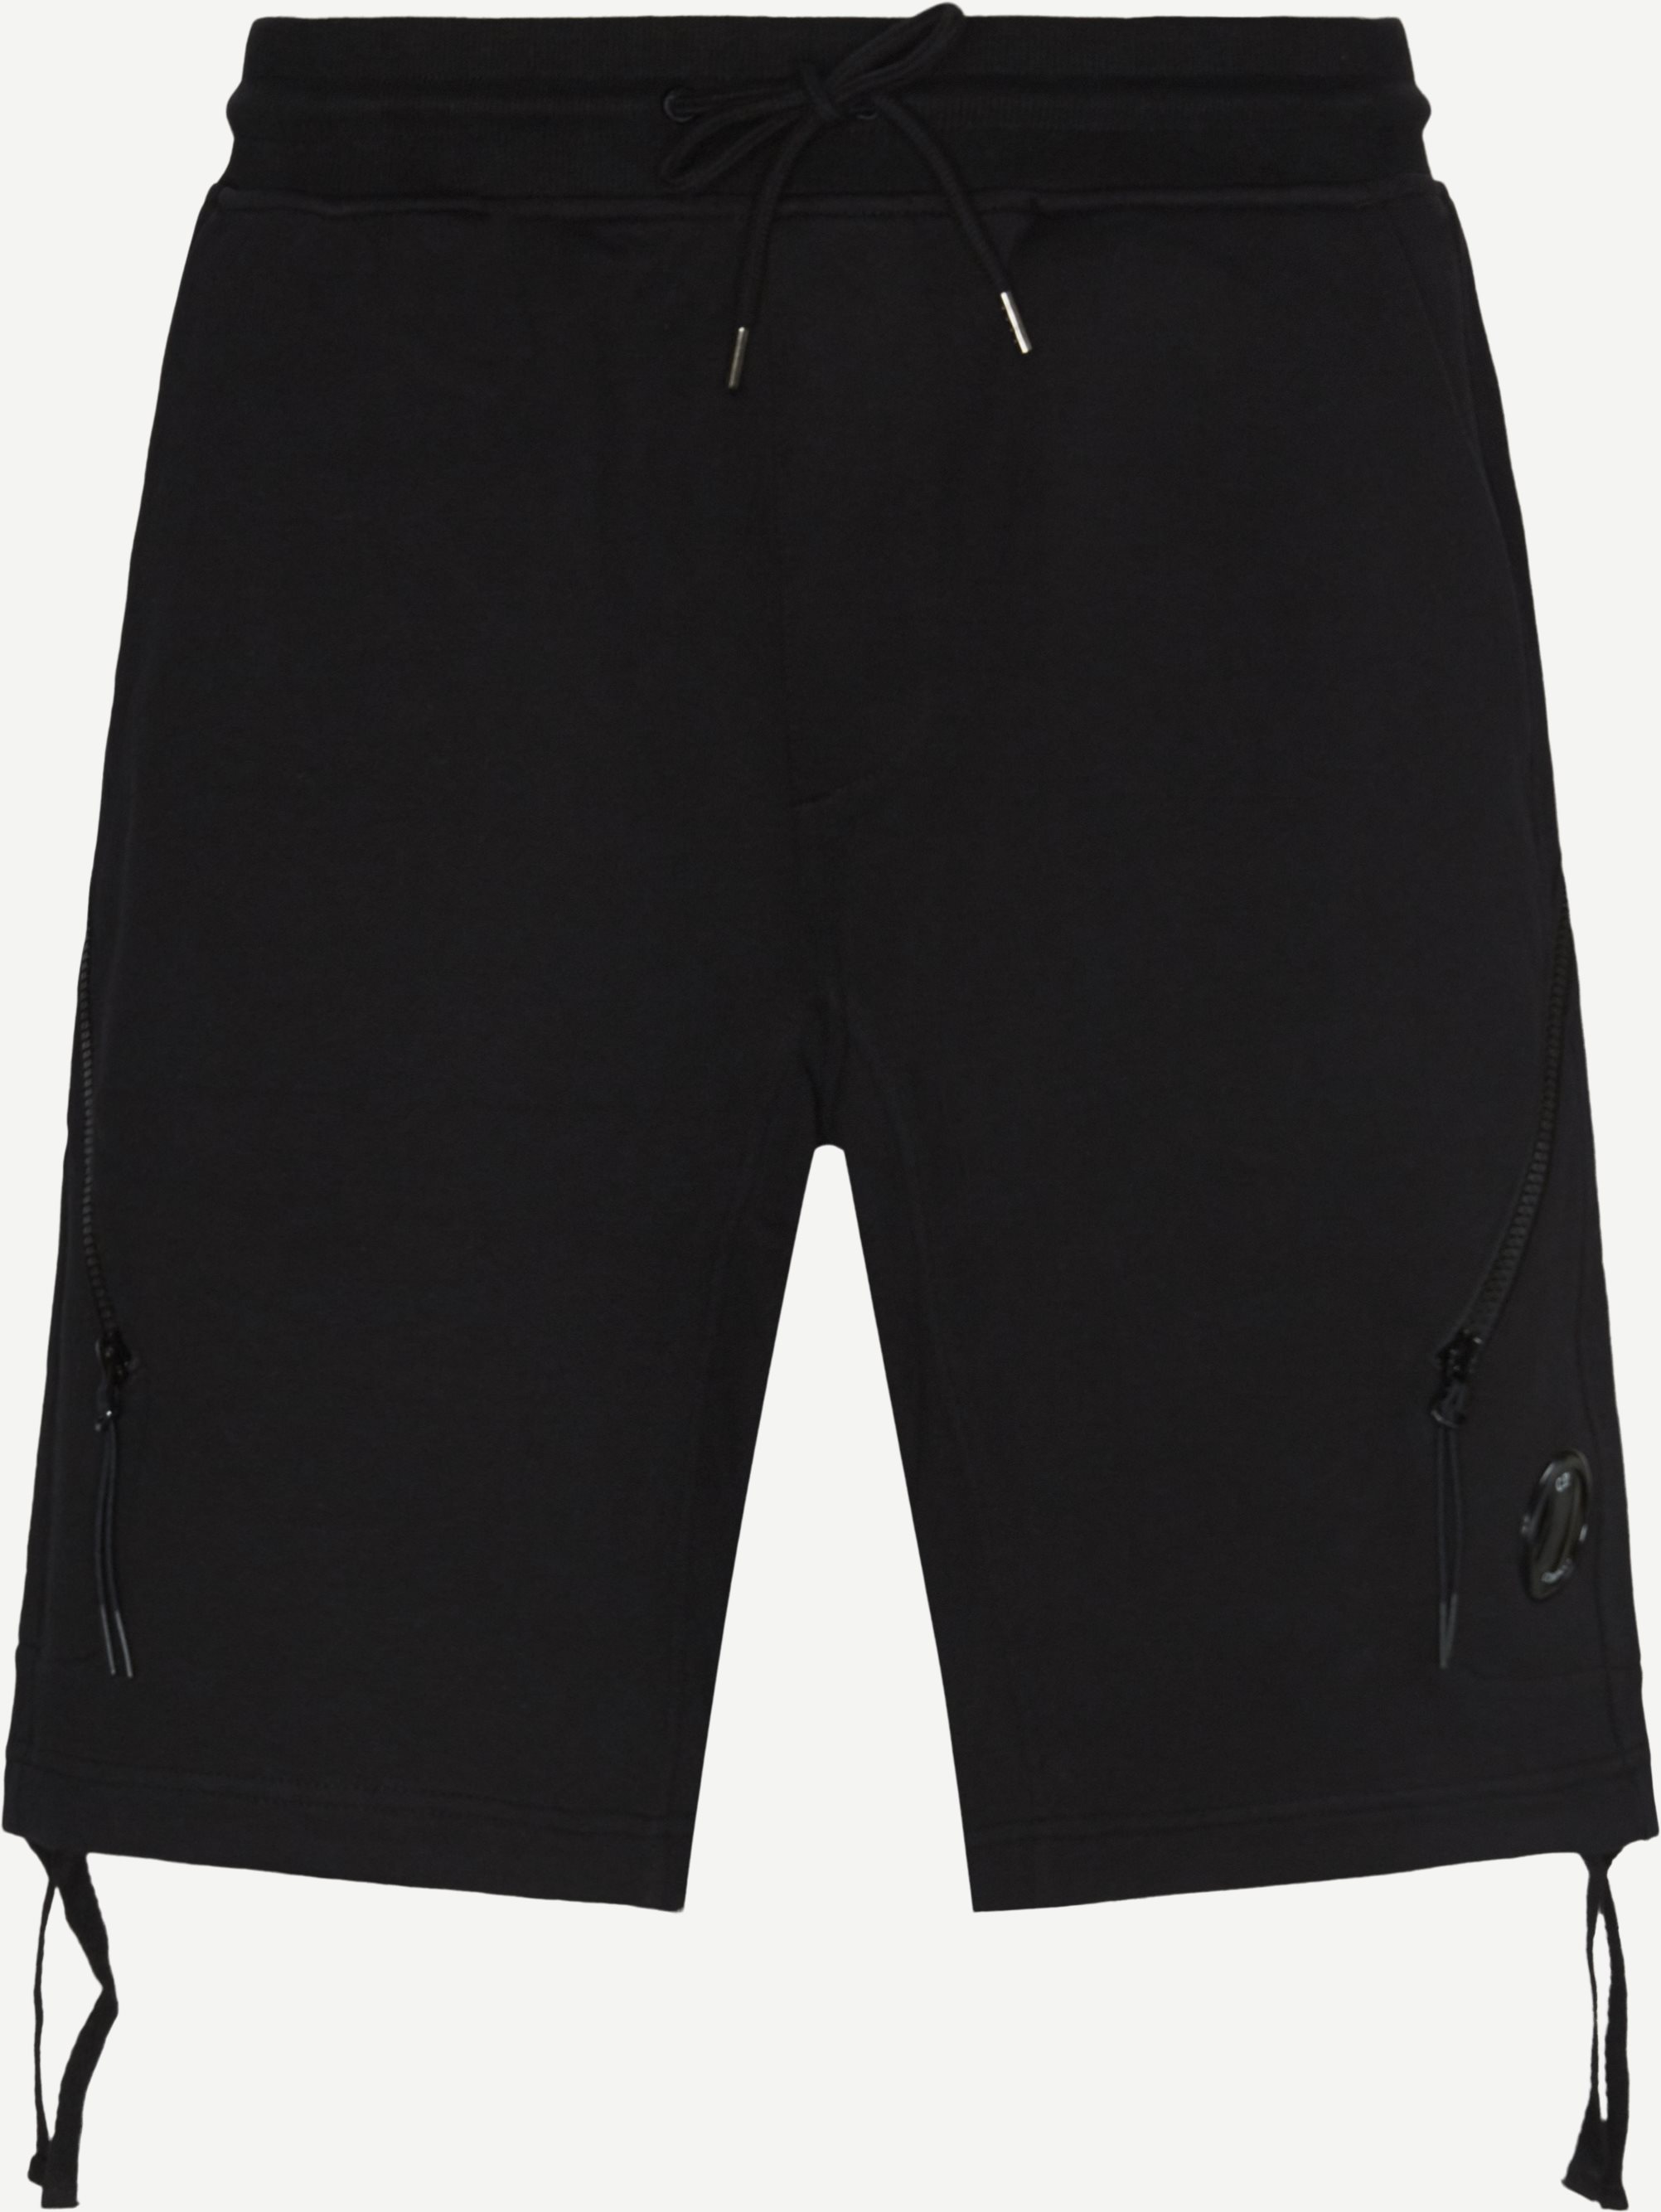 Shorts - Black